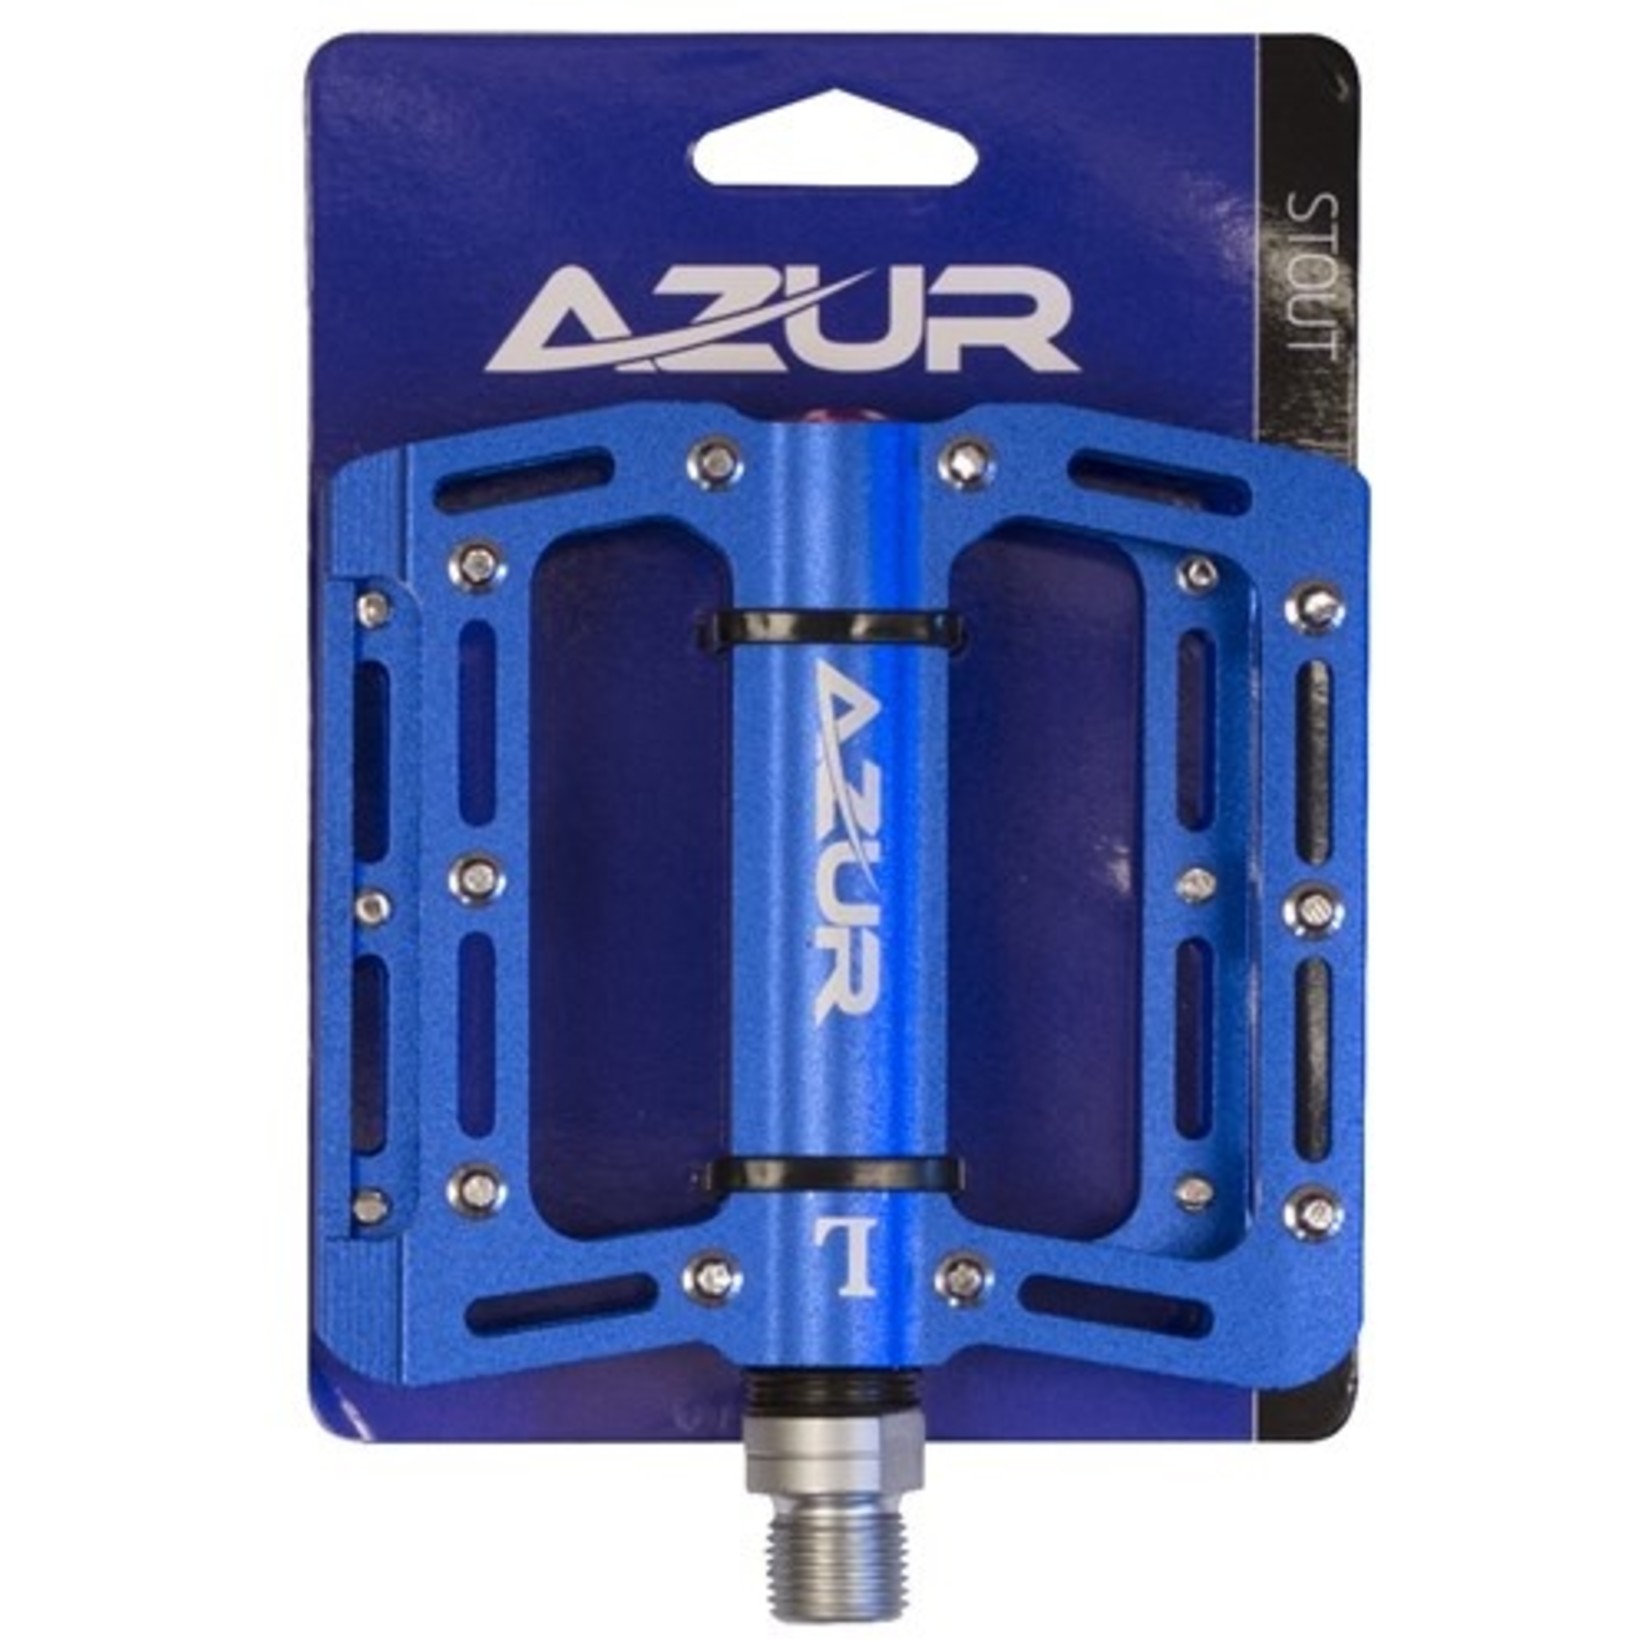 Azur Azur Bike/Cycling Stout Pedal Pedal Size - 107mm X 101mm - 410g Pair - Blue